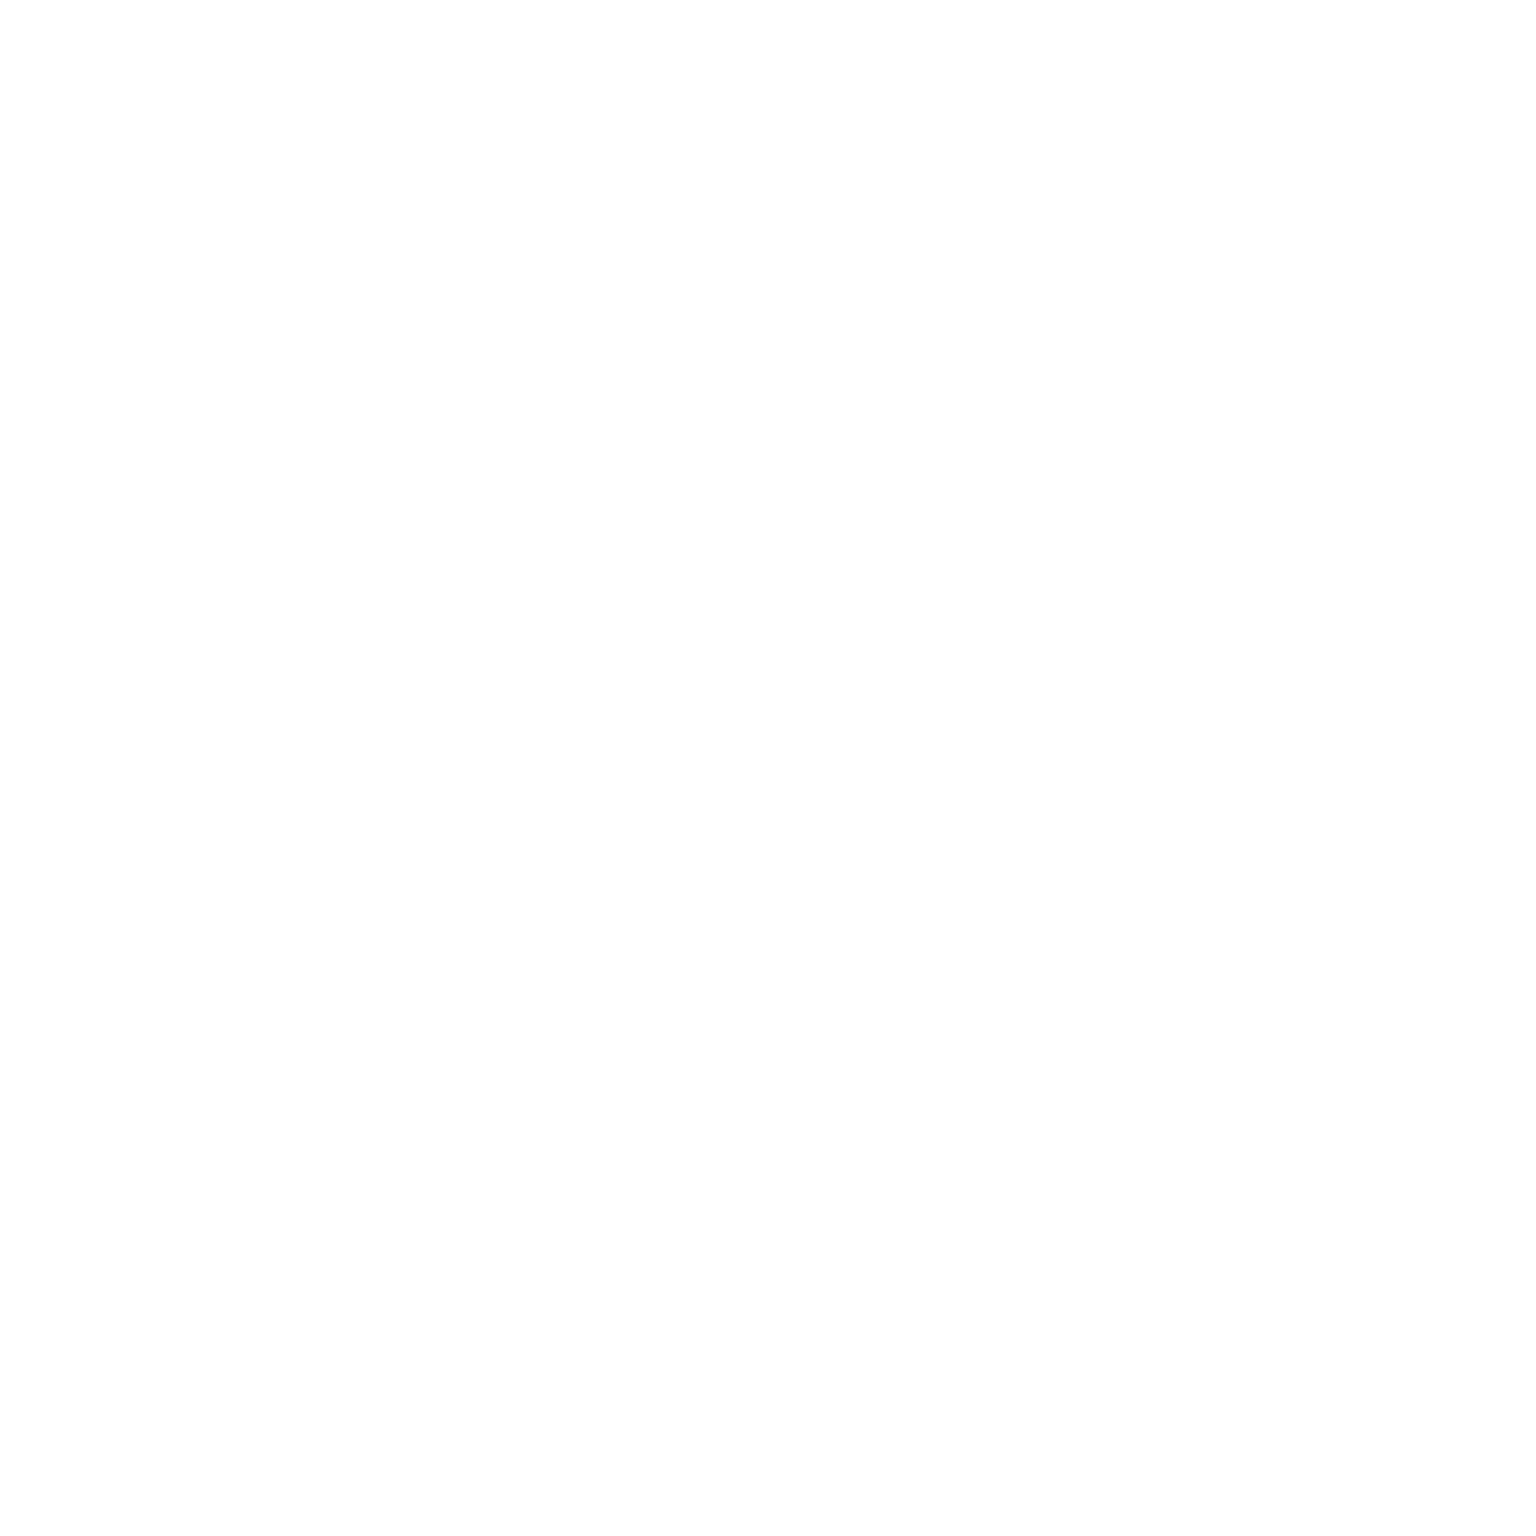 Amazon-Studios.png